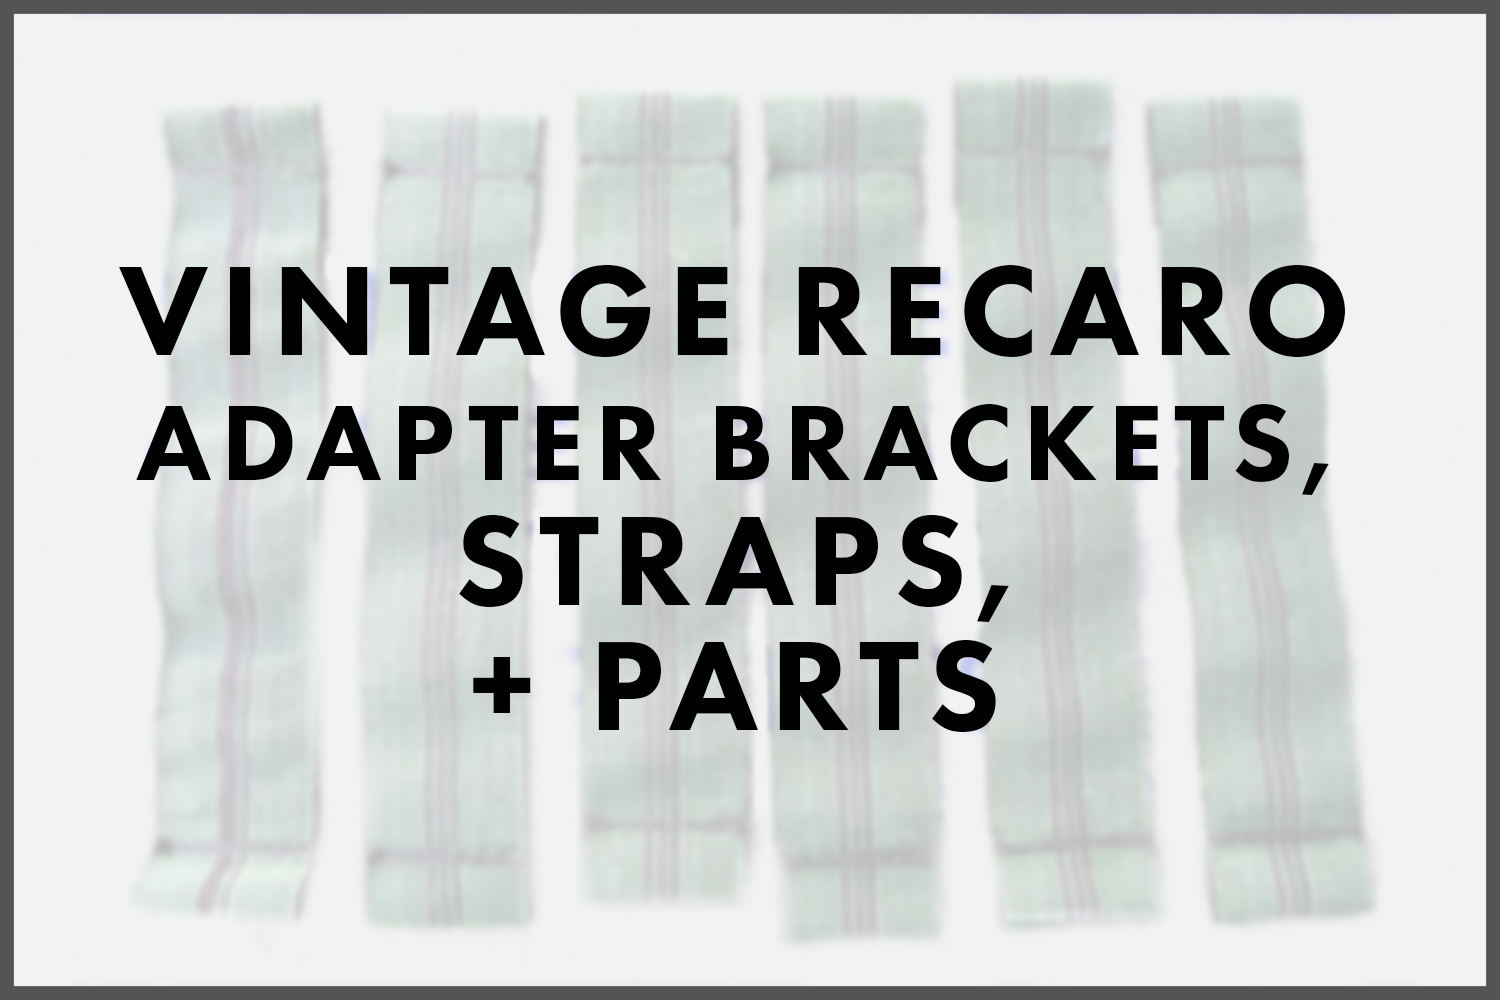 Vintage Recaro Adapter Brackets, etc copy.png